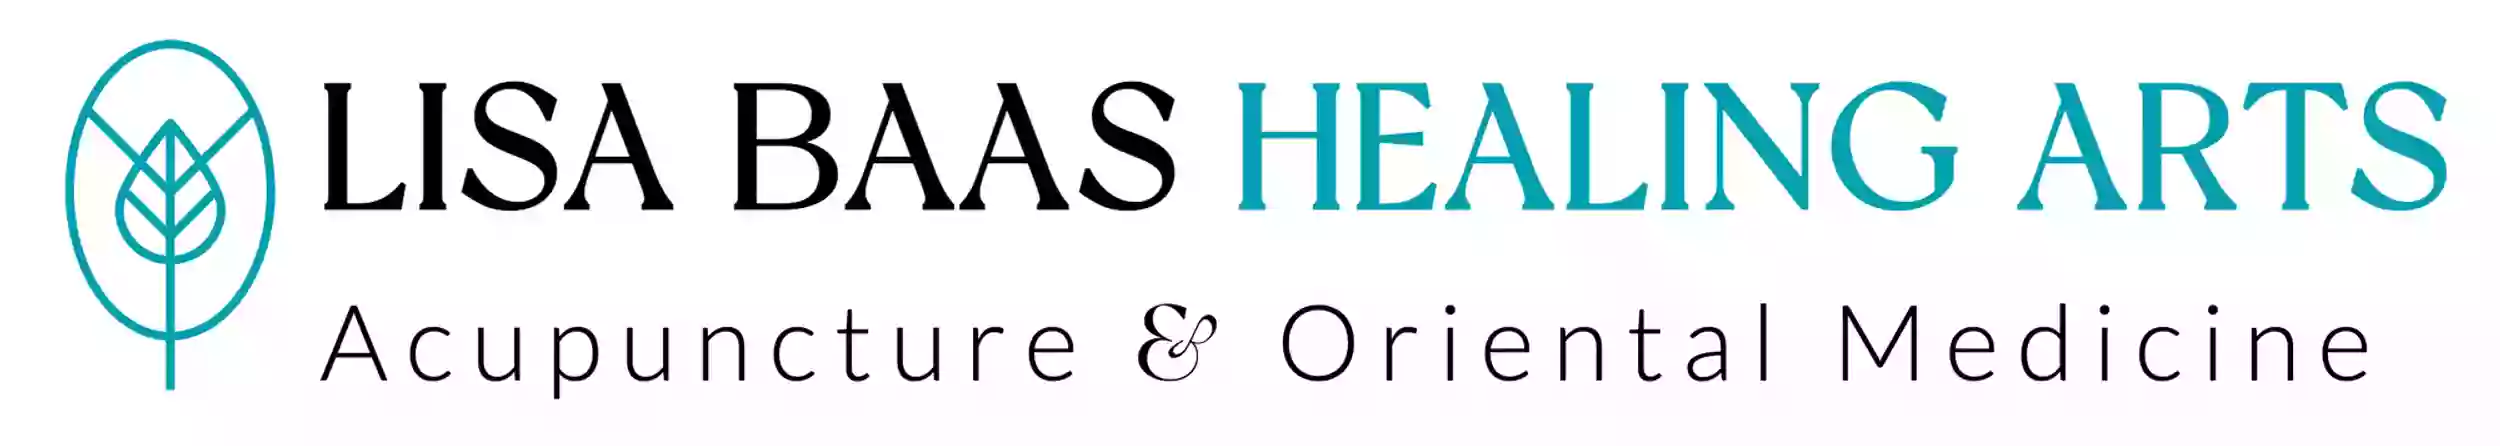 Lisa Baas Healing Arts Acupuncture & Oriental Medicine